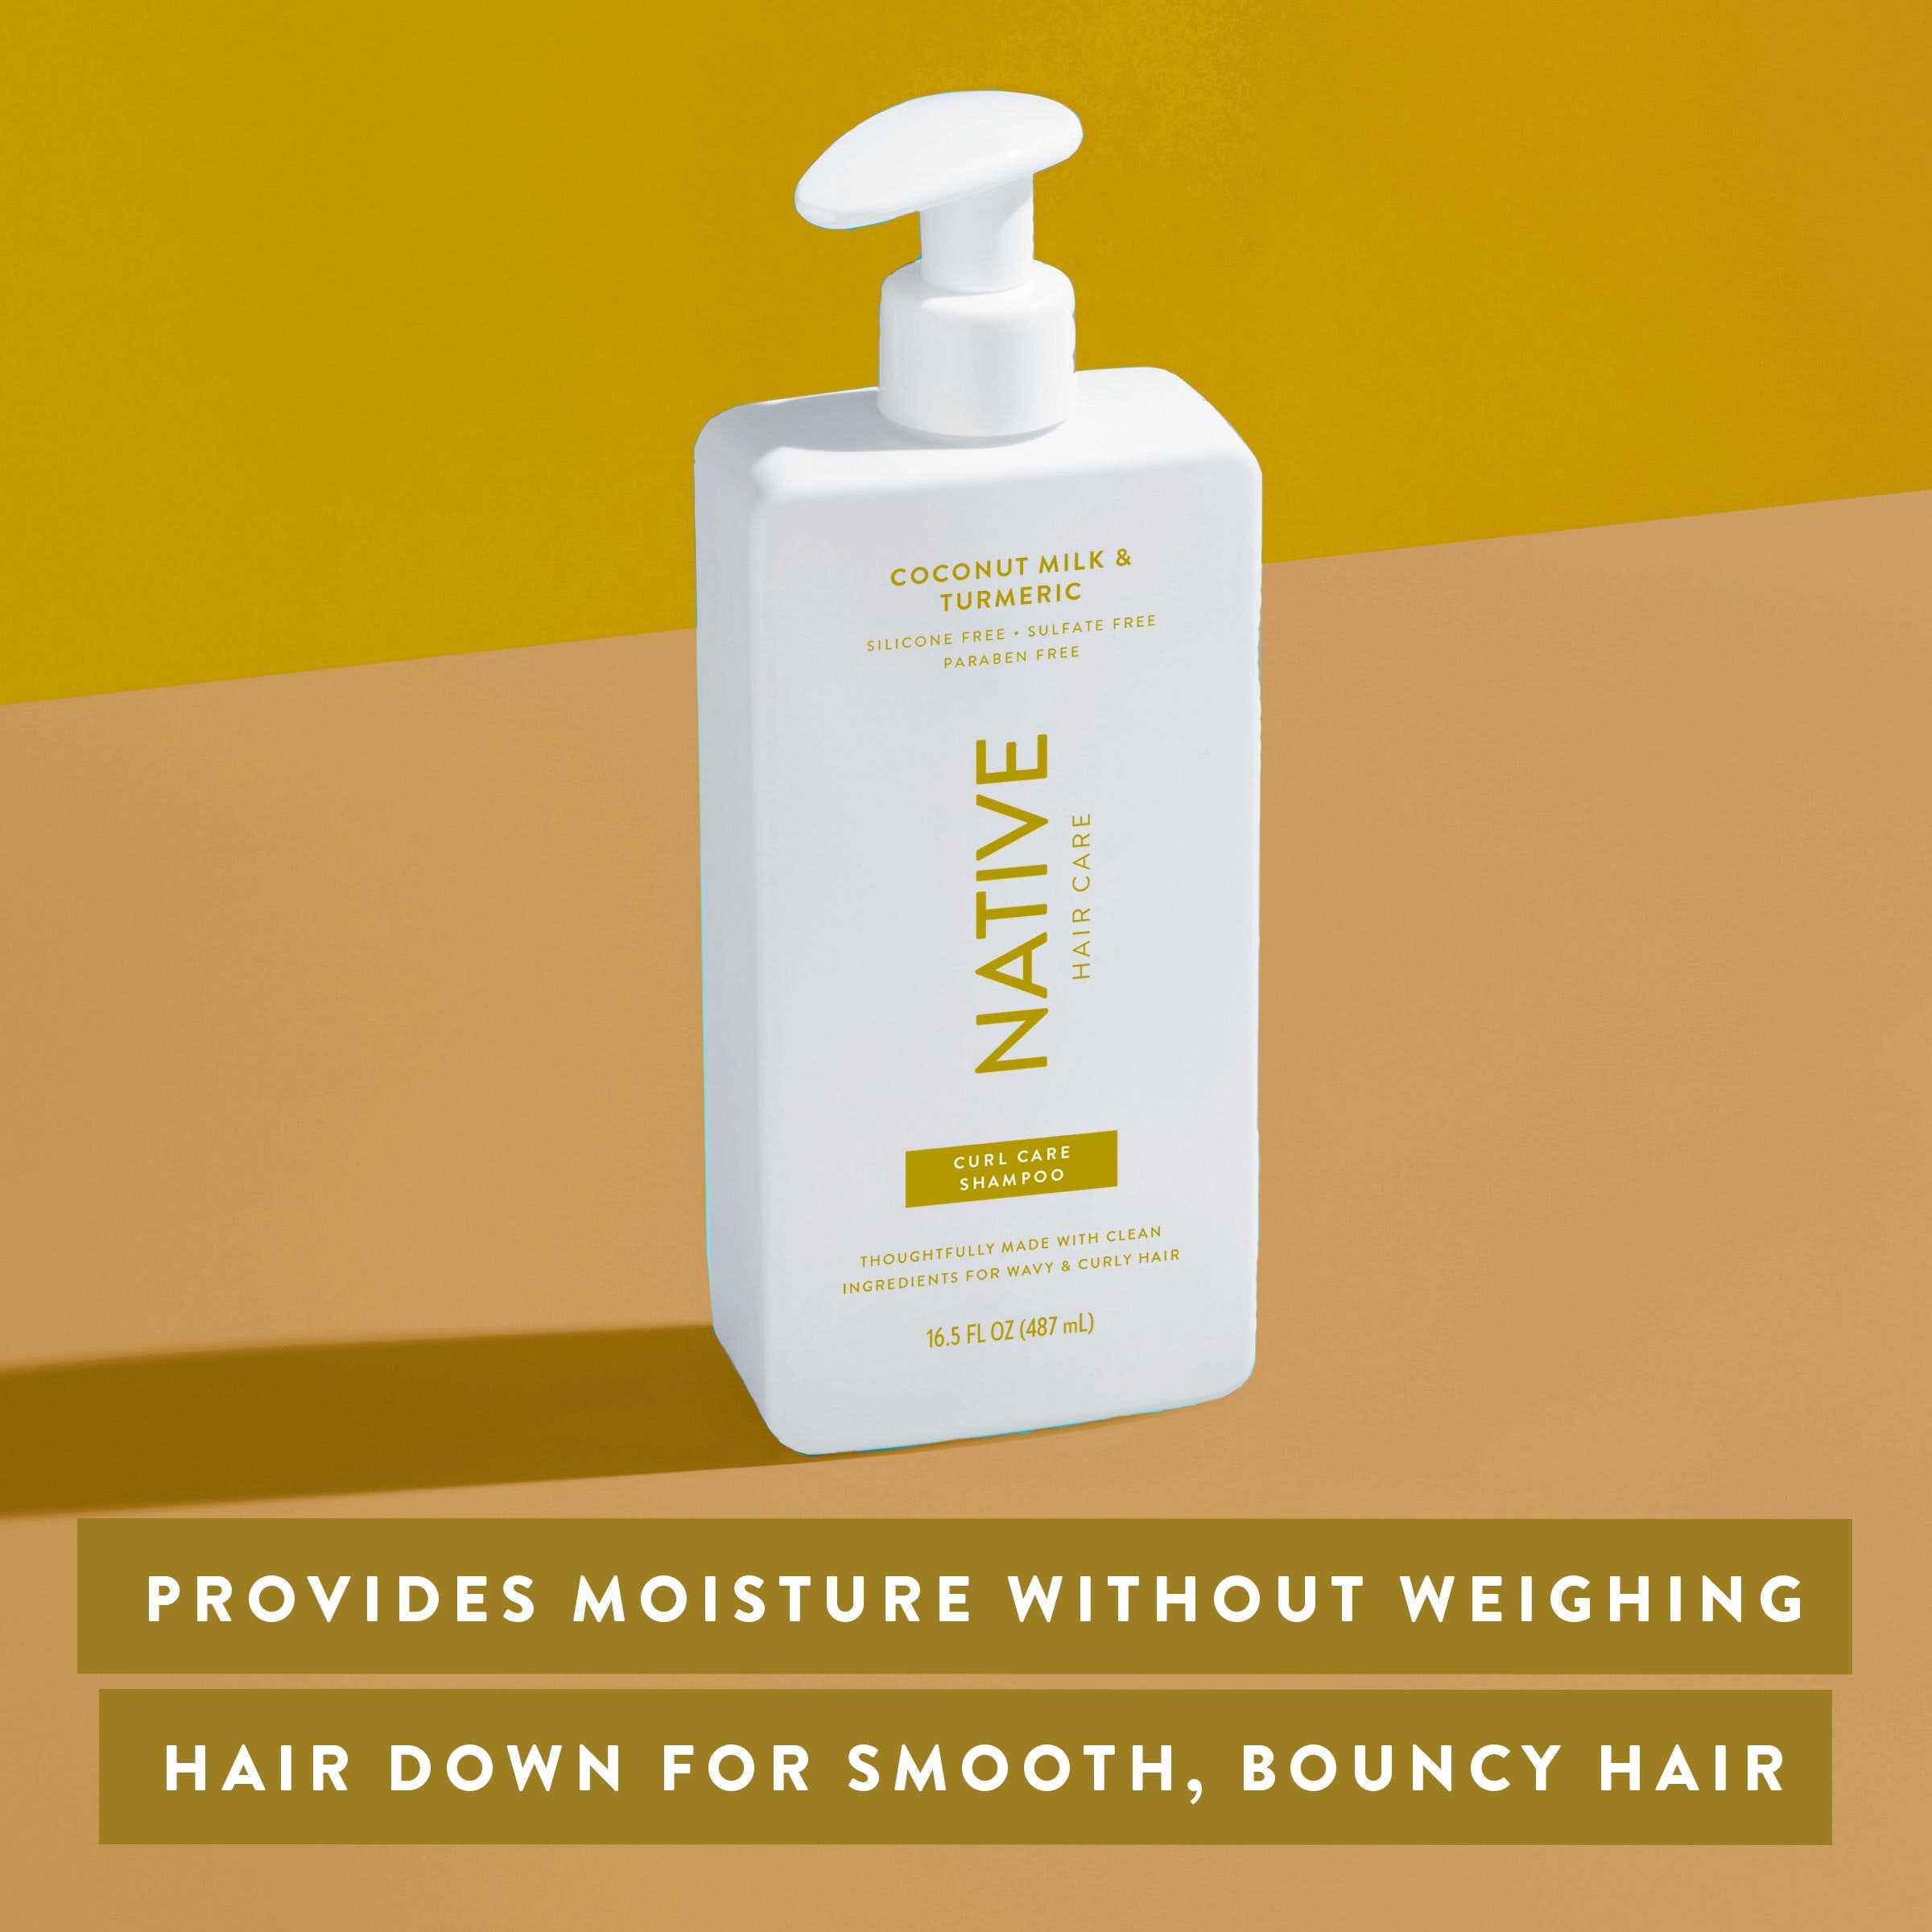 Native Curl Care Shampoo, Coconut Milk & Turmeric, Sulfate & Paraben Free, 16.5 oz - image 3 of 6